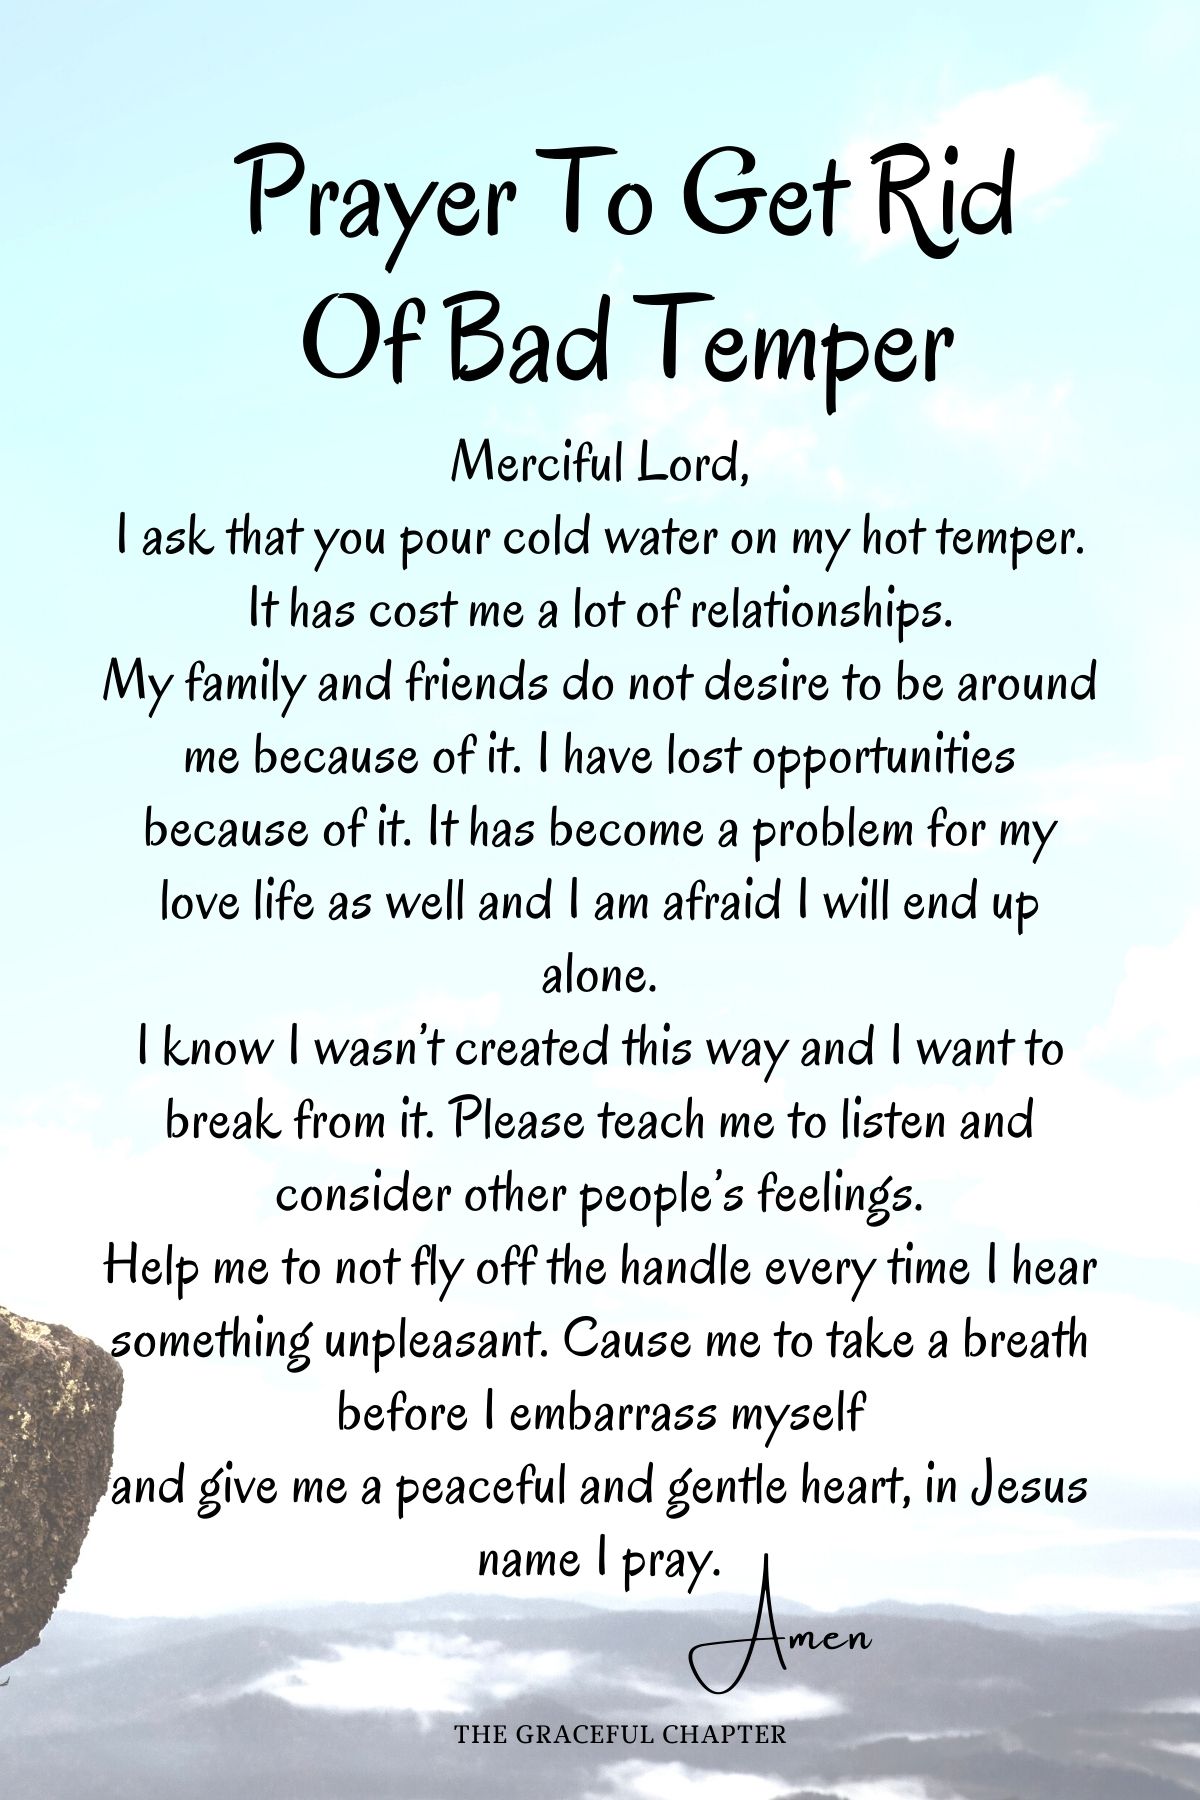 Prayer to get rid of bad temper